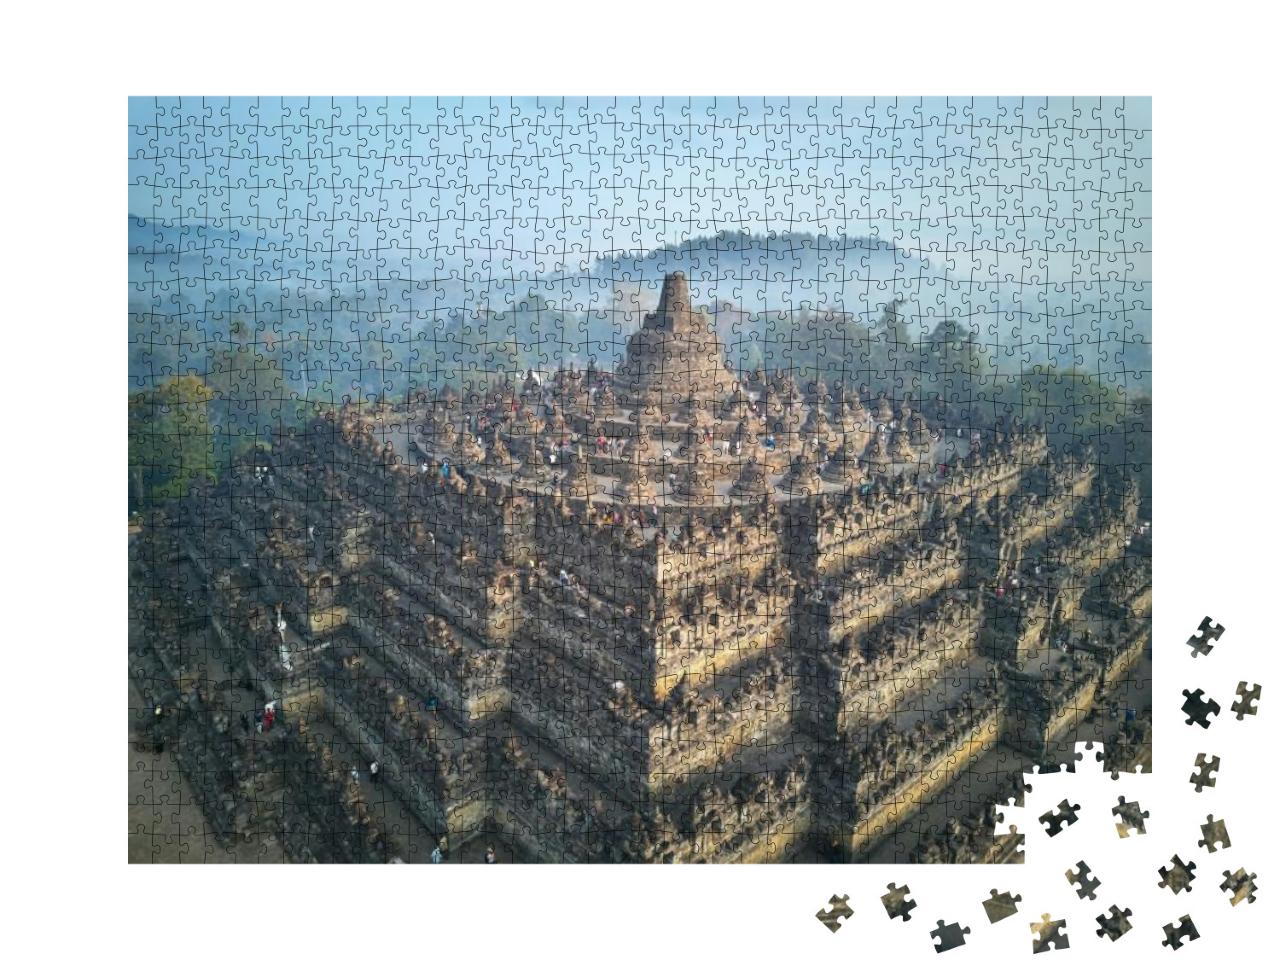 Borobudur Buddhist Temple... Jigsaw Puzzle with 1000 pieces